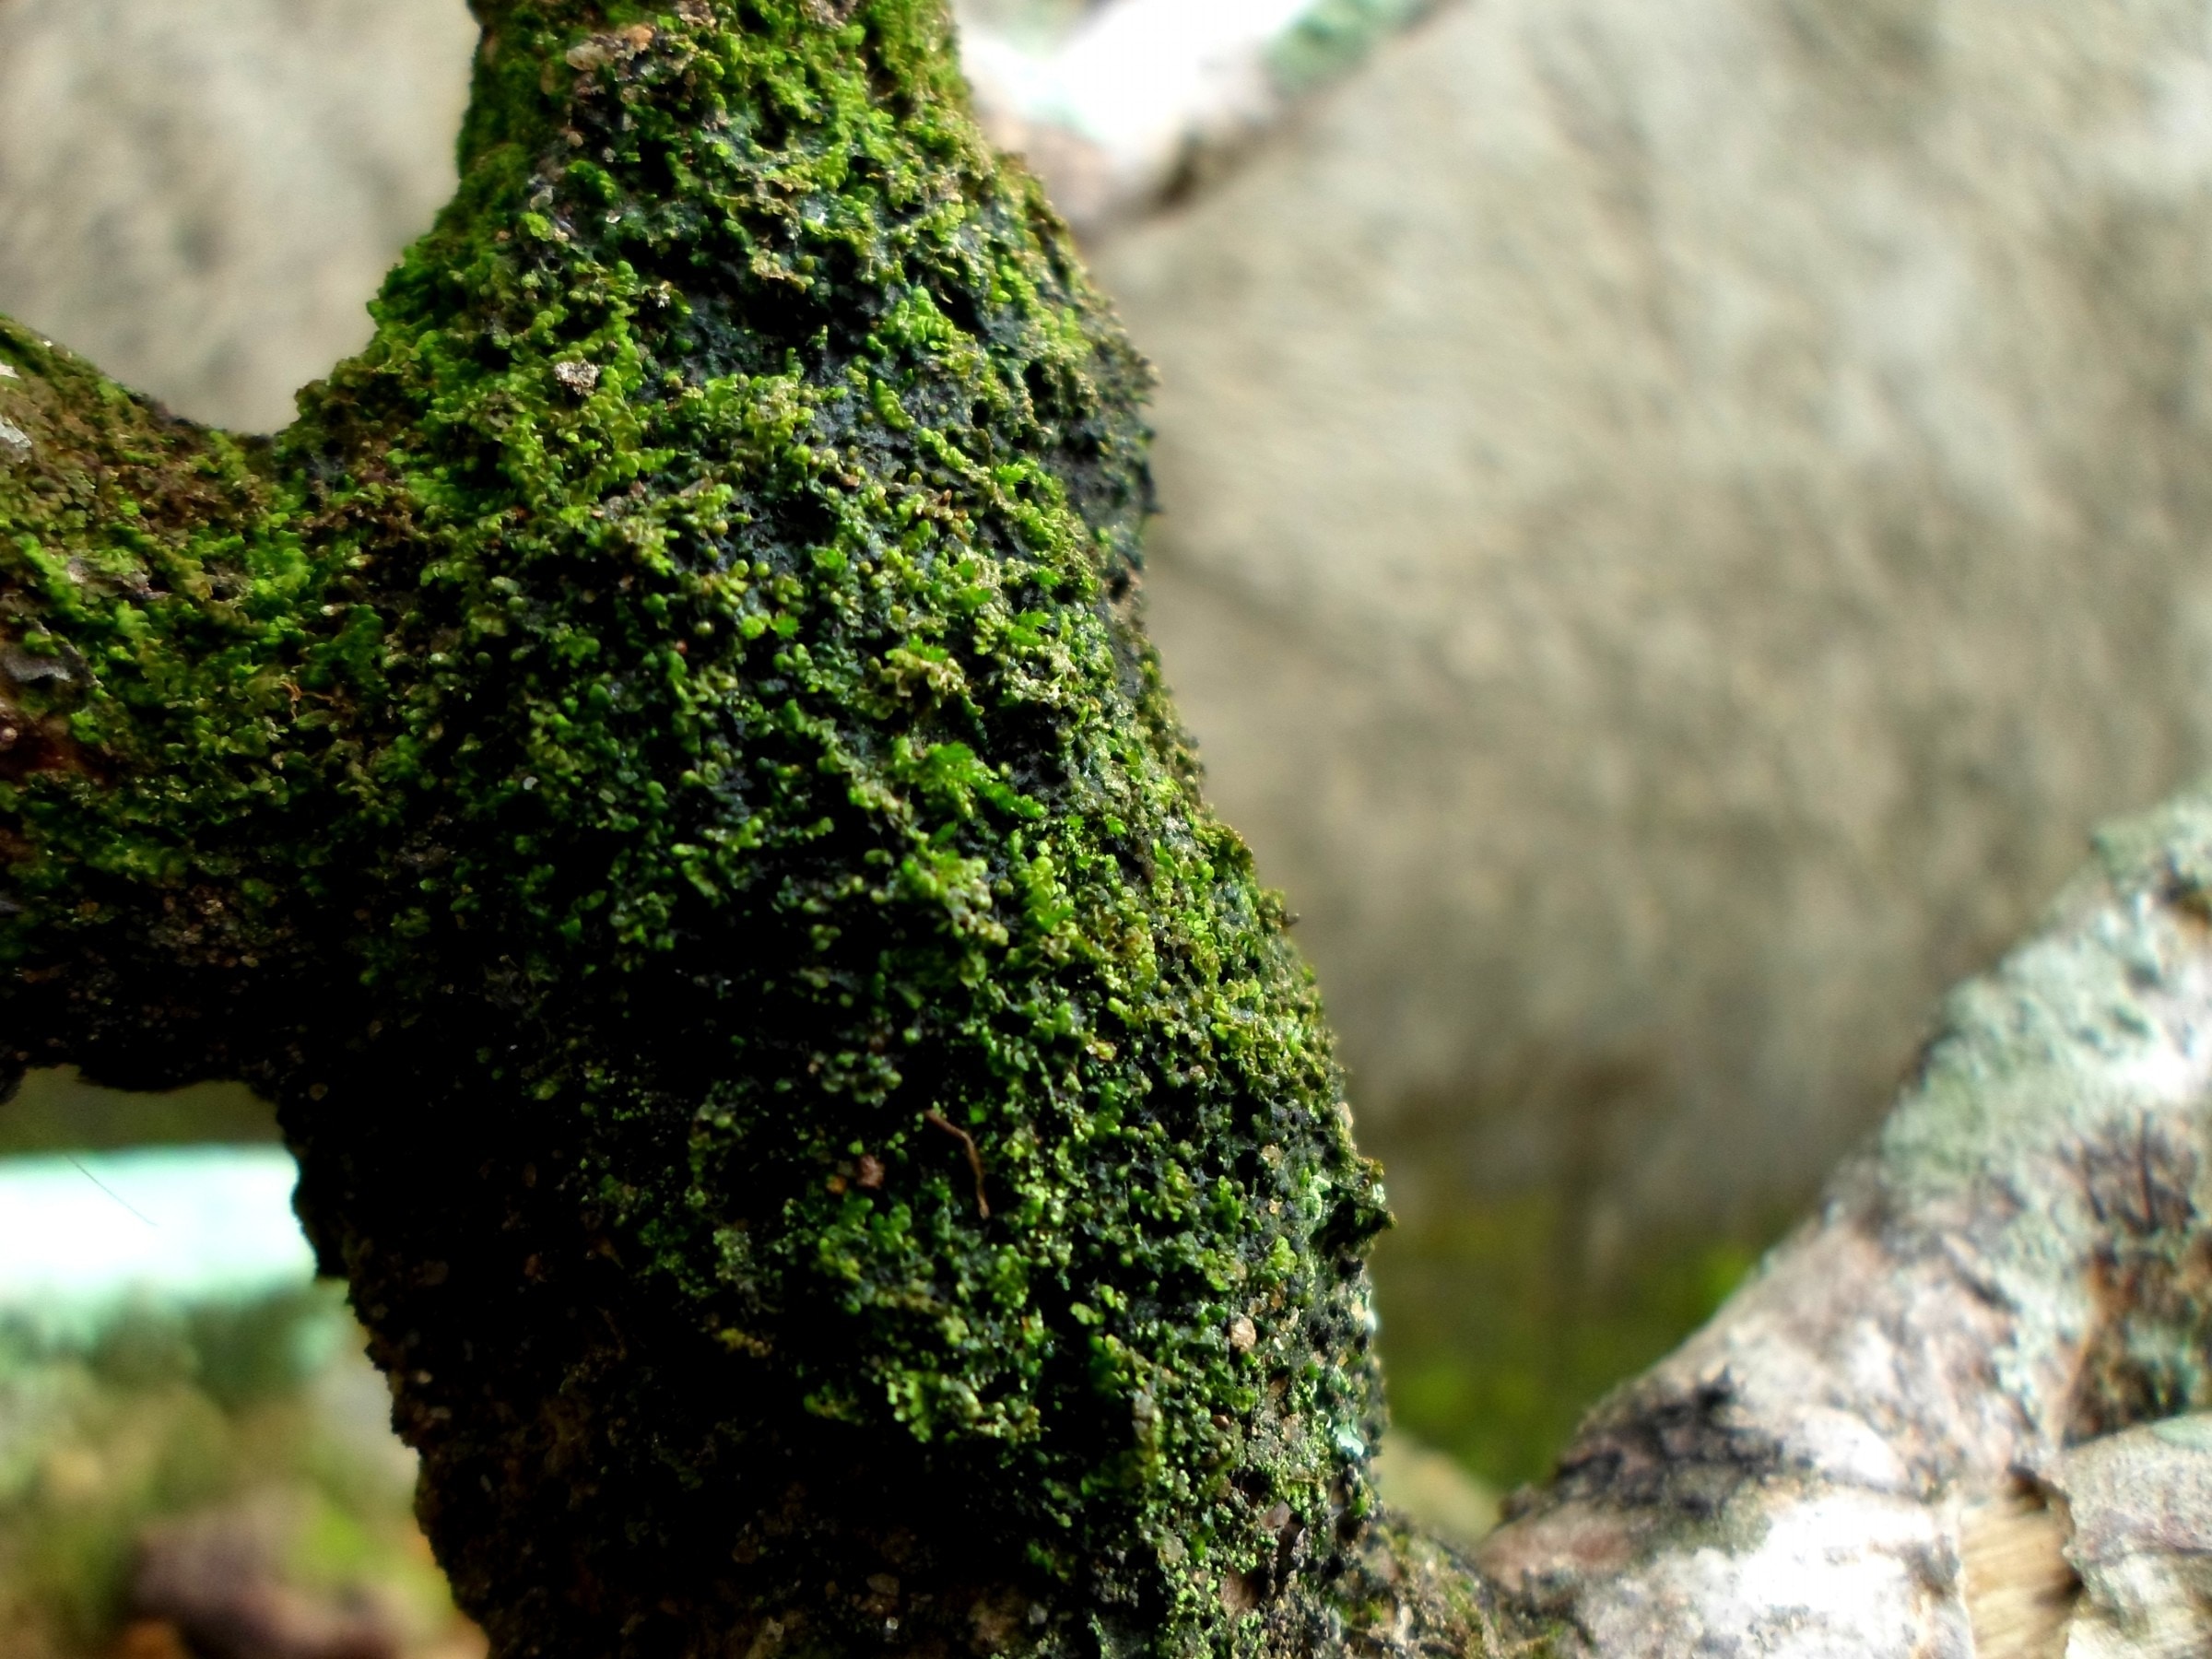 green moss on wood